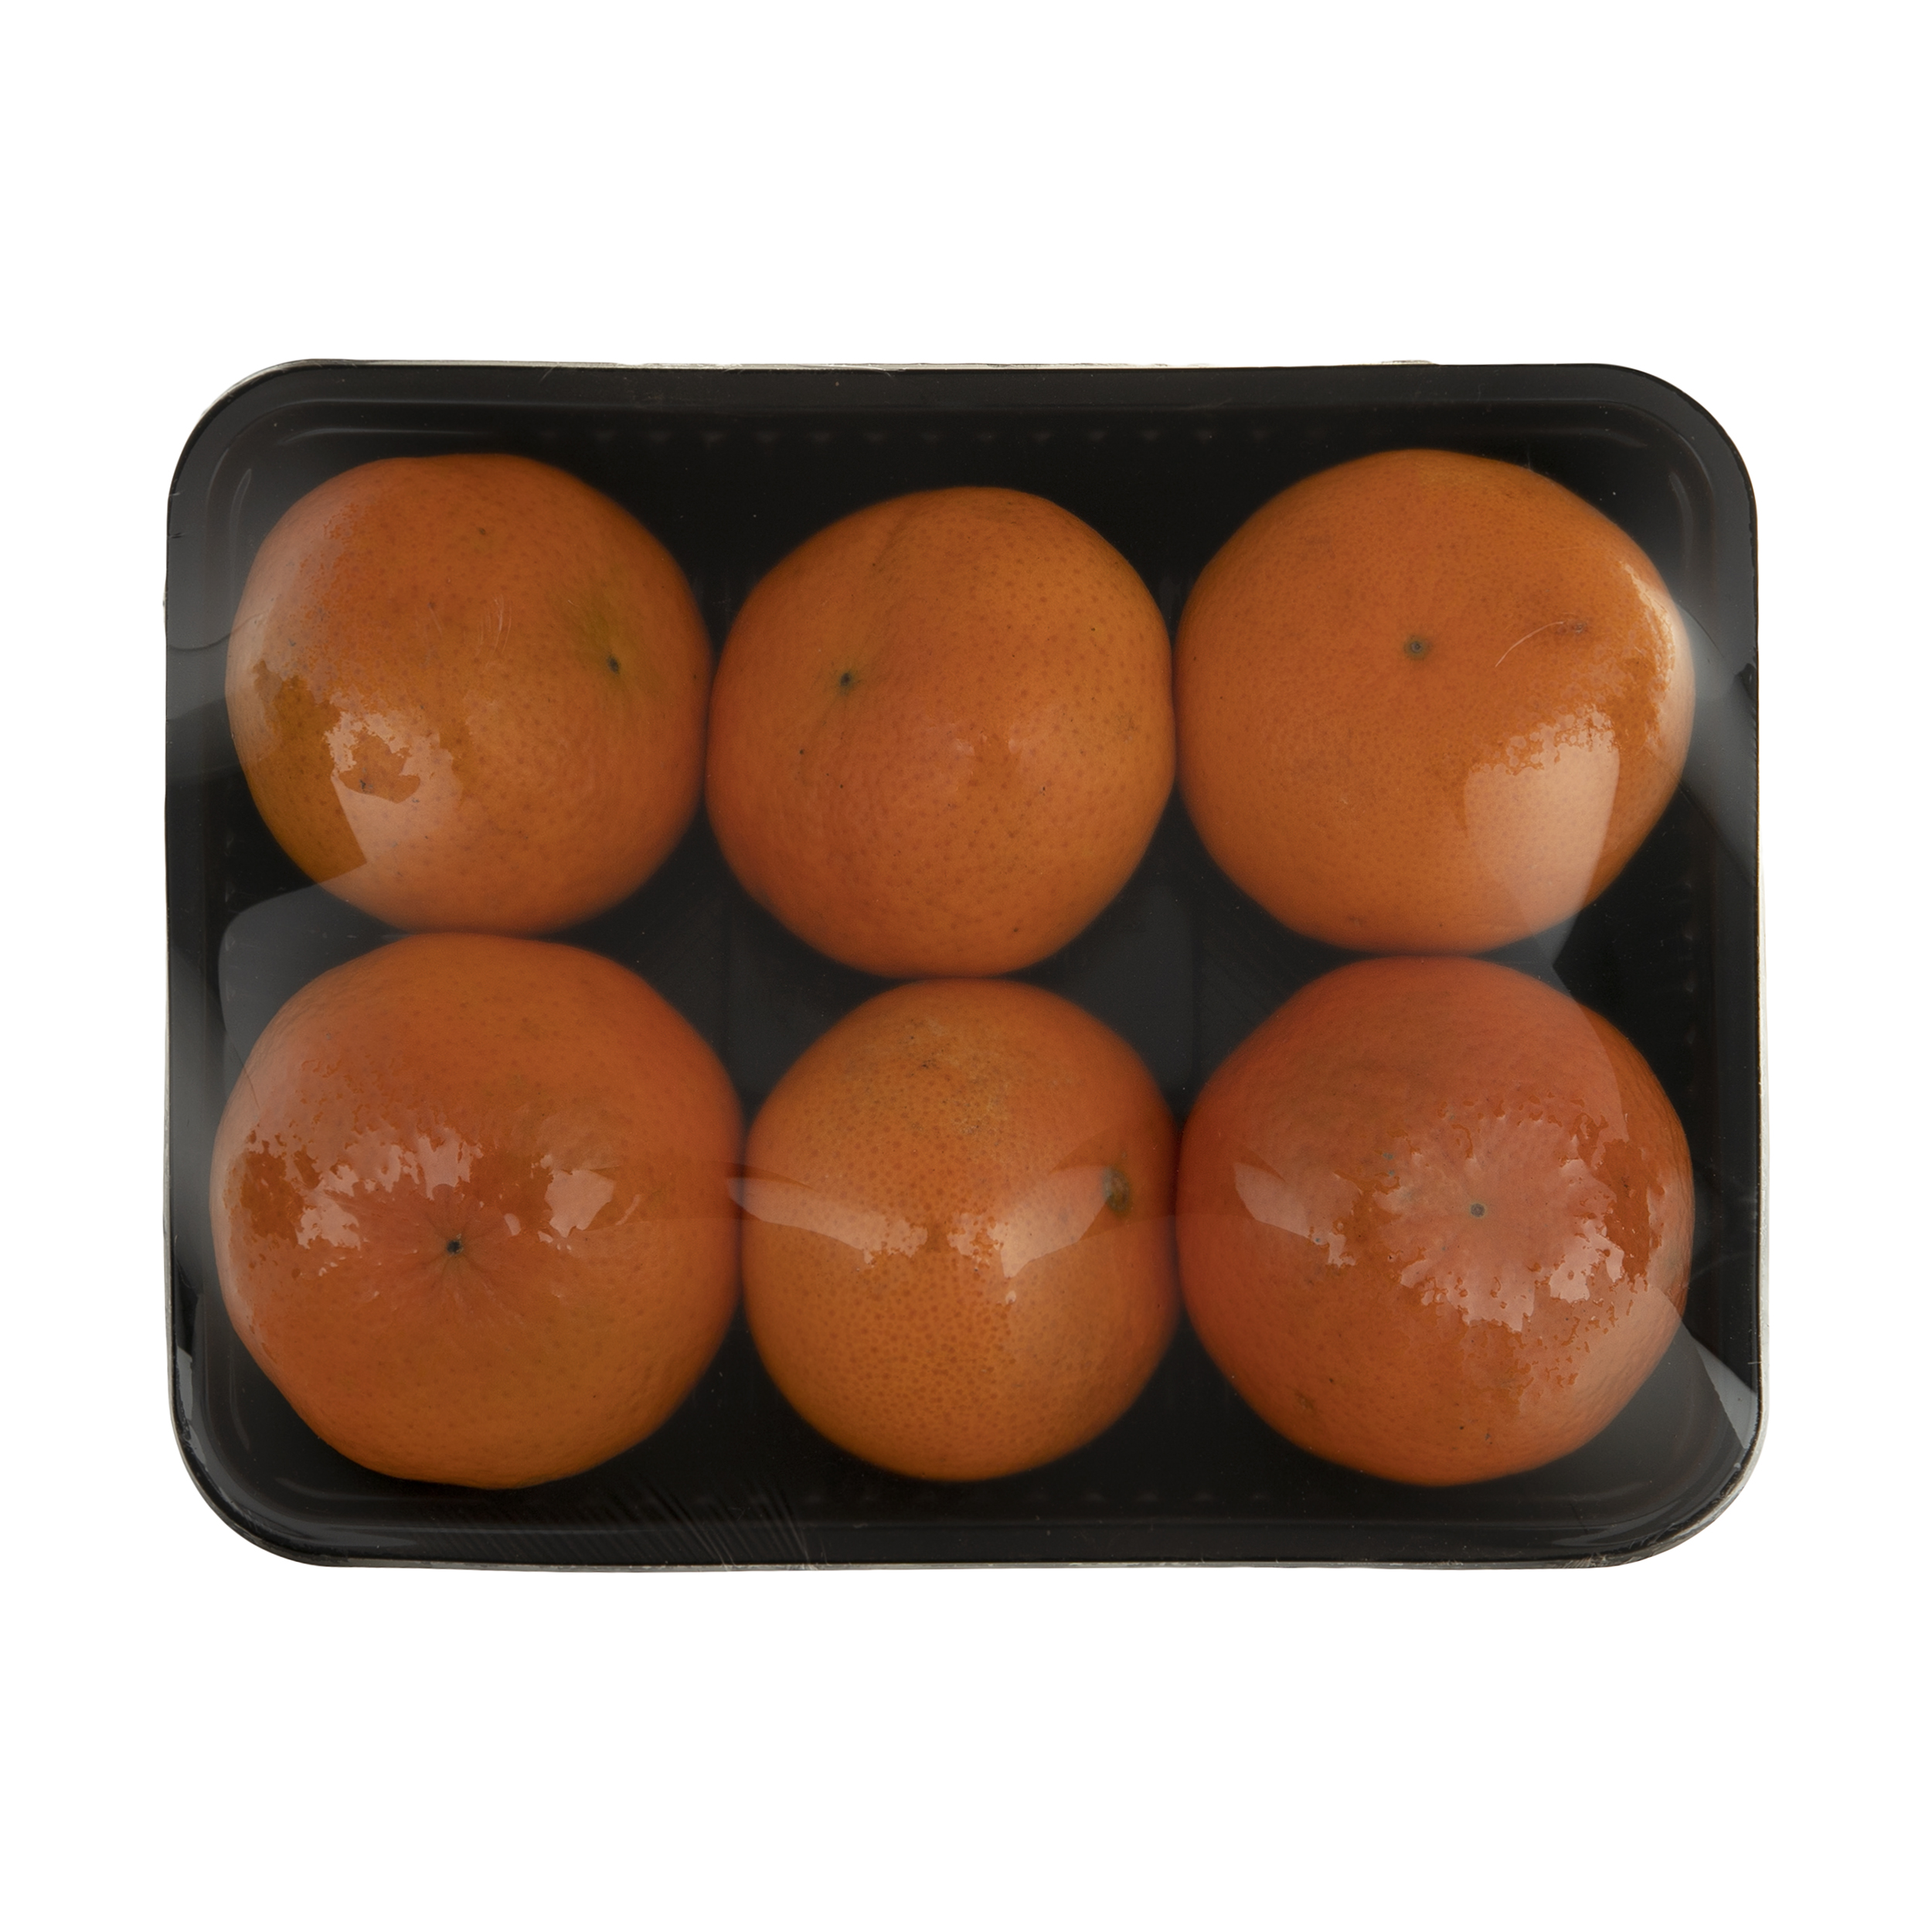 نارنج - 1 کیلوگرم